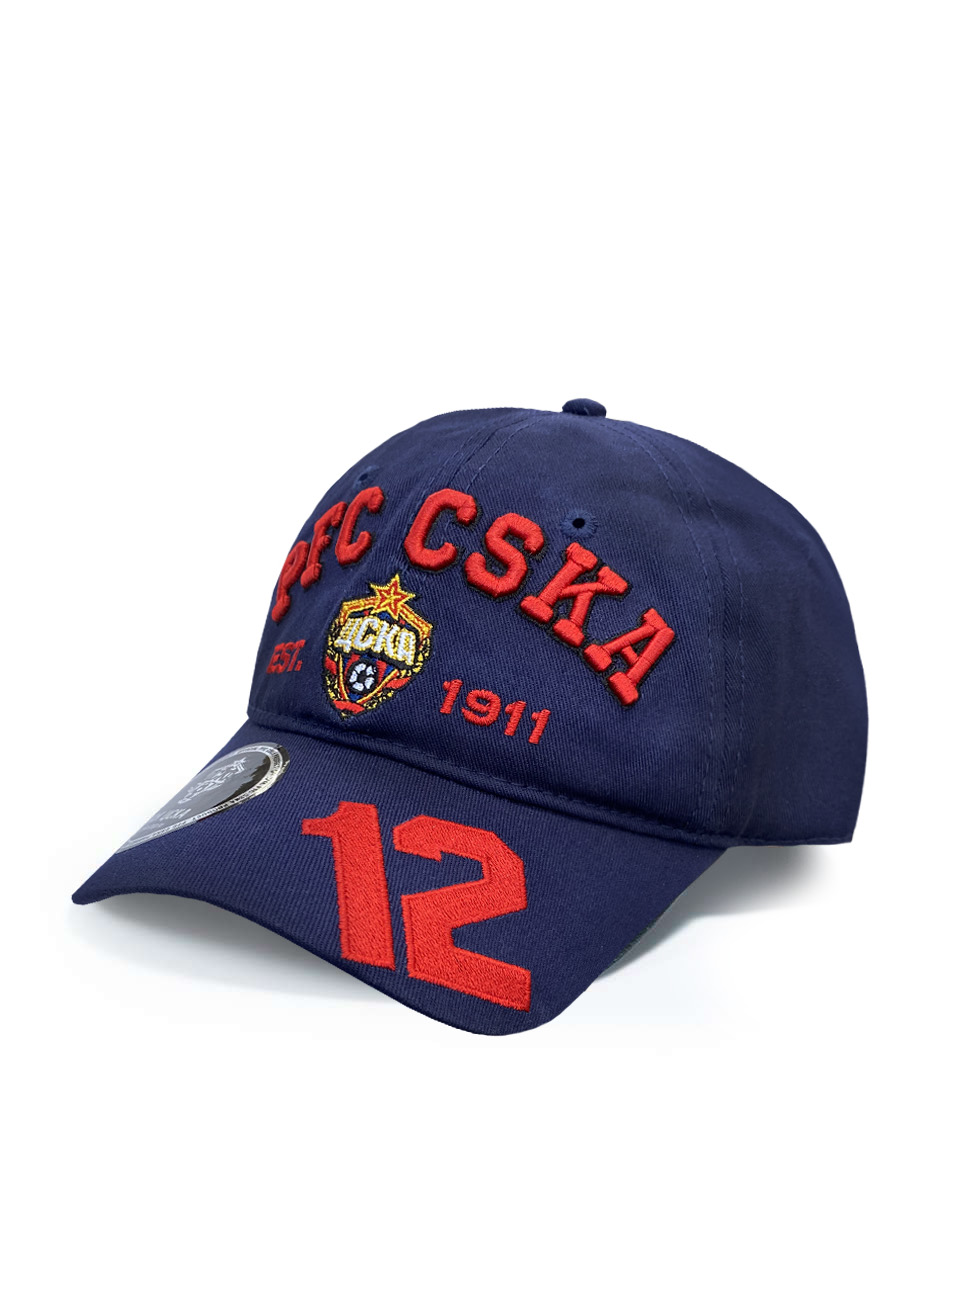 Бейсболка PFC CSKA №12 РЕГИОН ООО 08190111 - фото 1